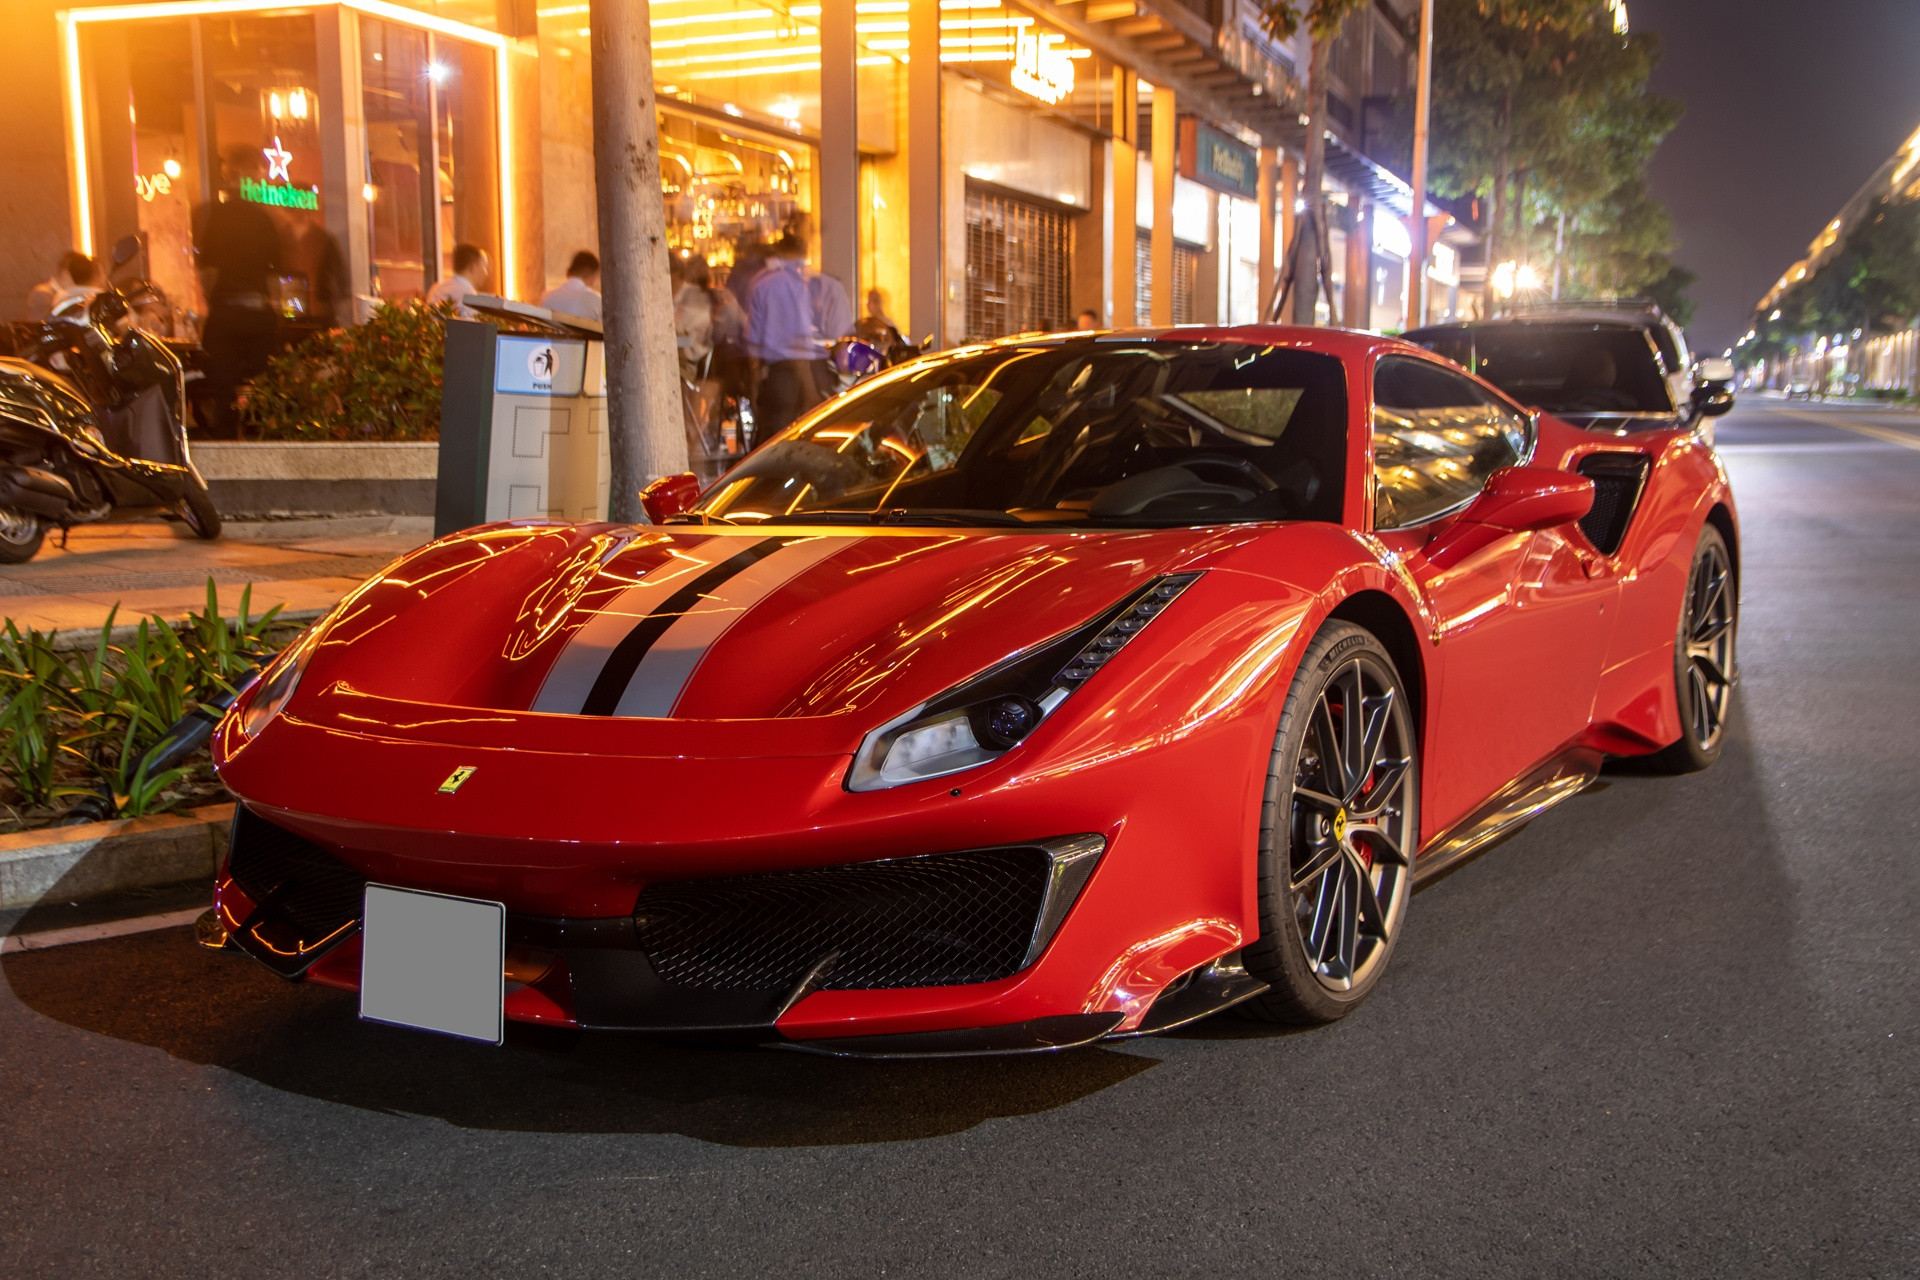 Ferrari anh 1